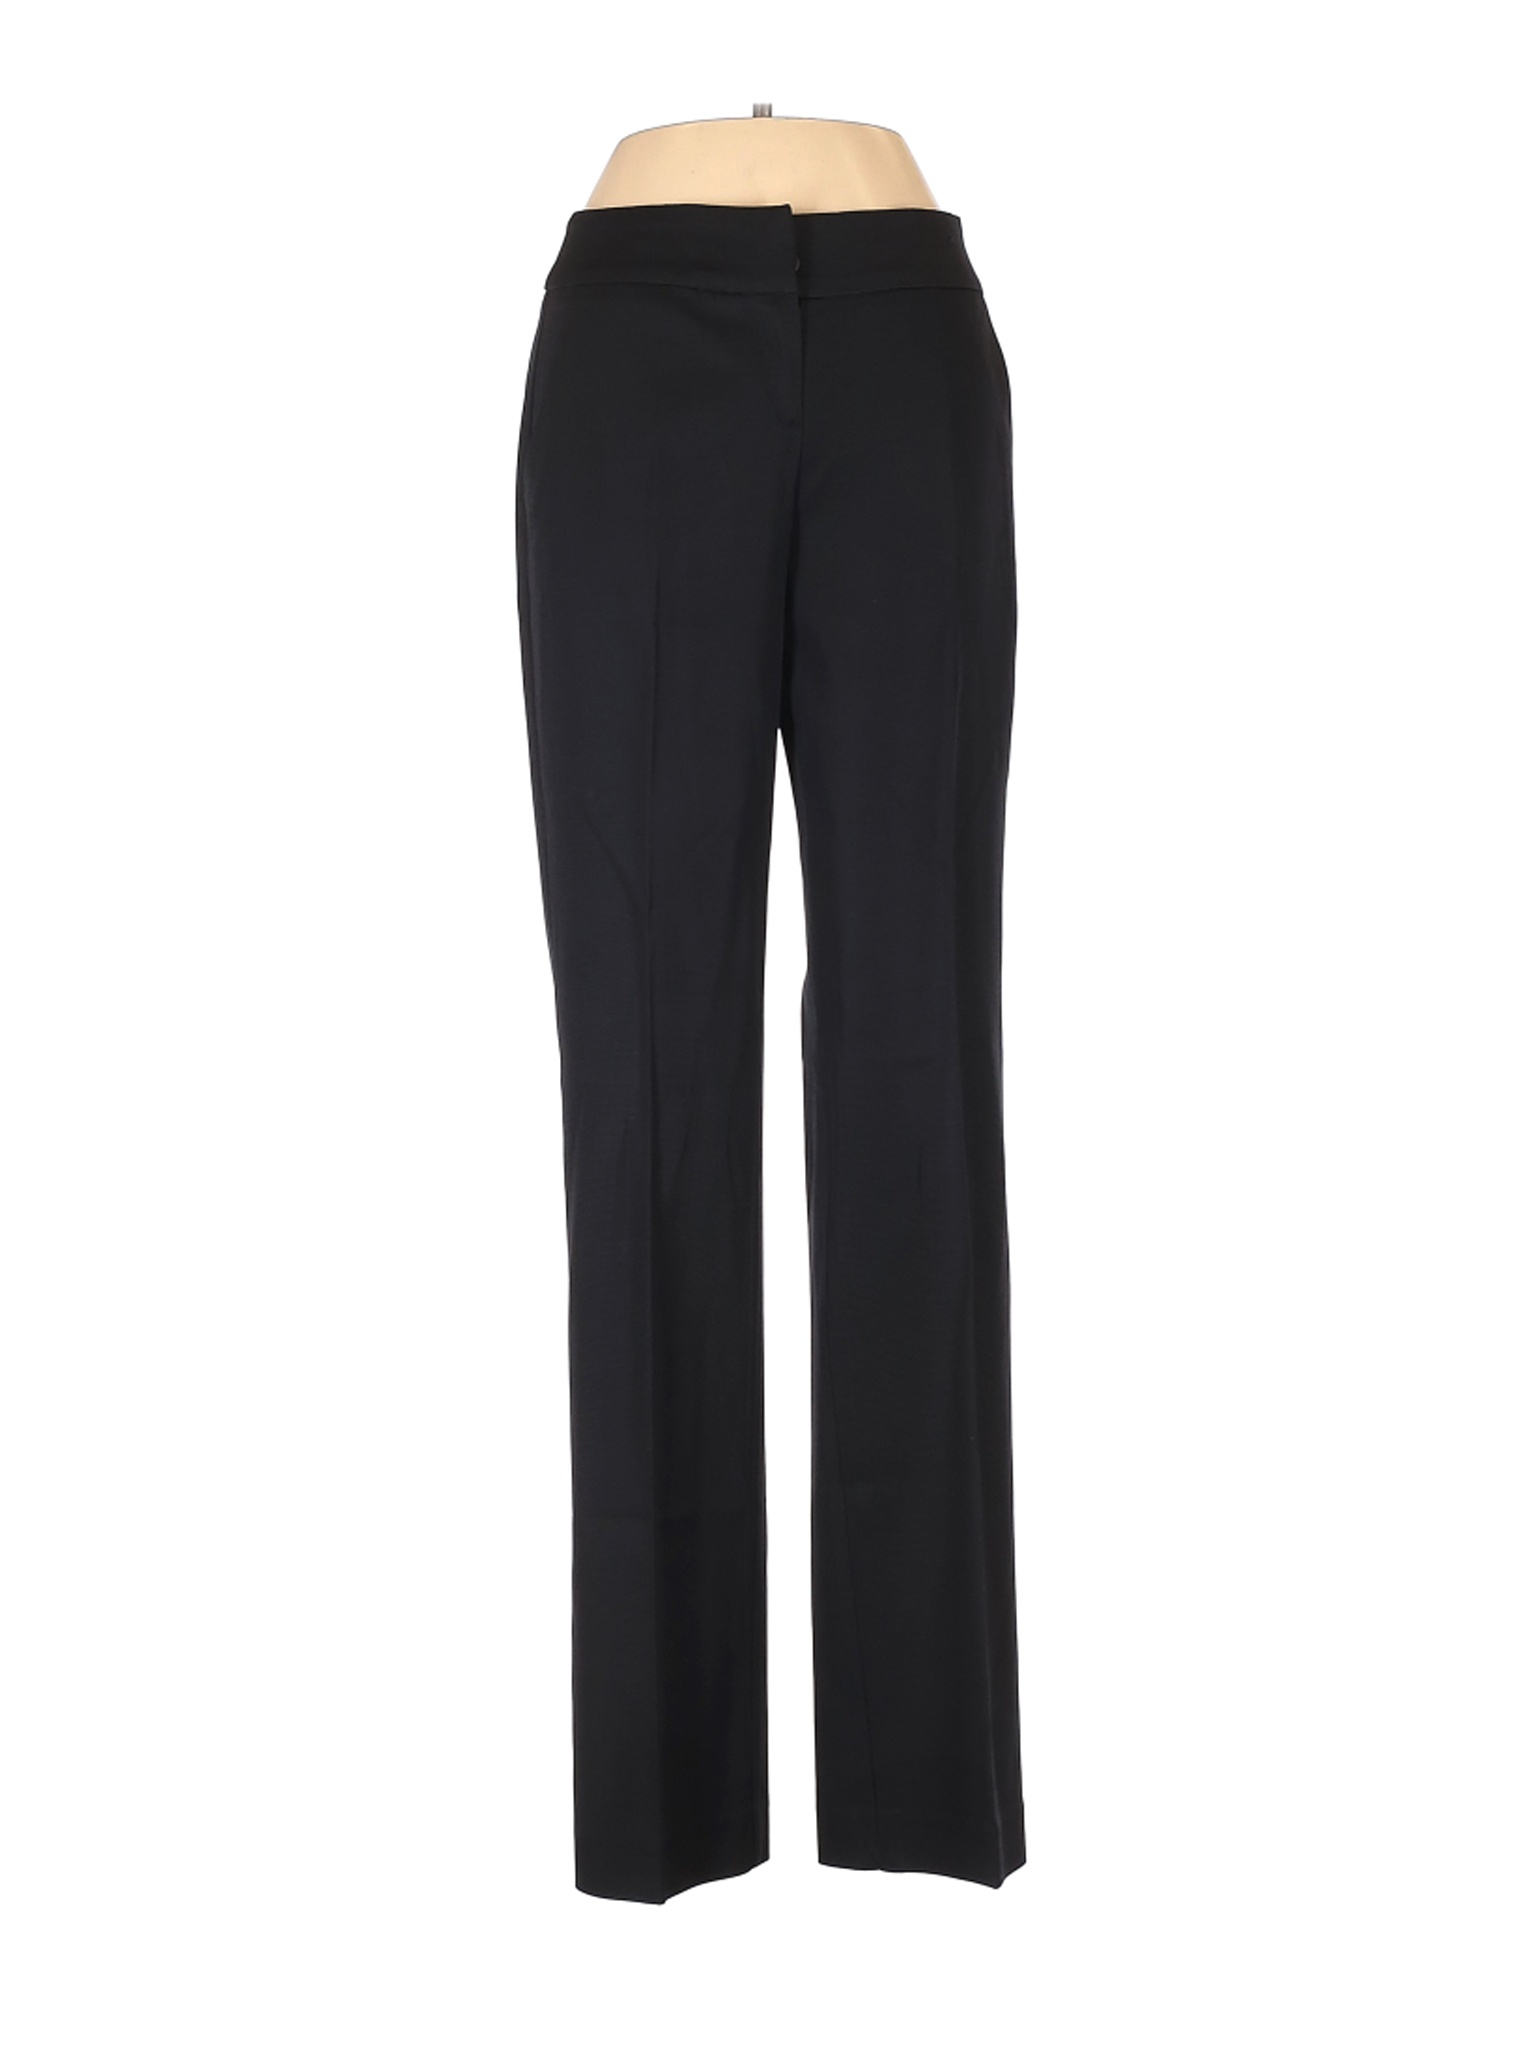 Class Women Black Dress Pants 38 eur | eBay